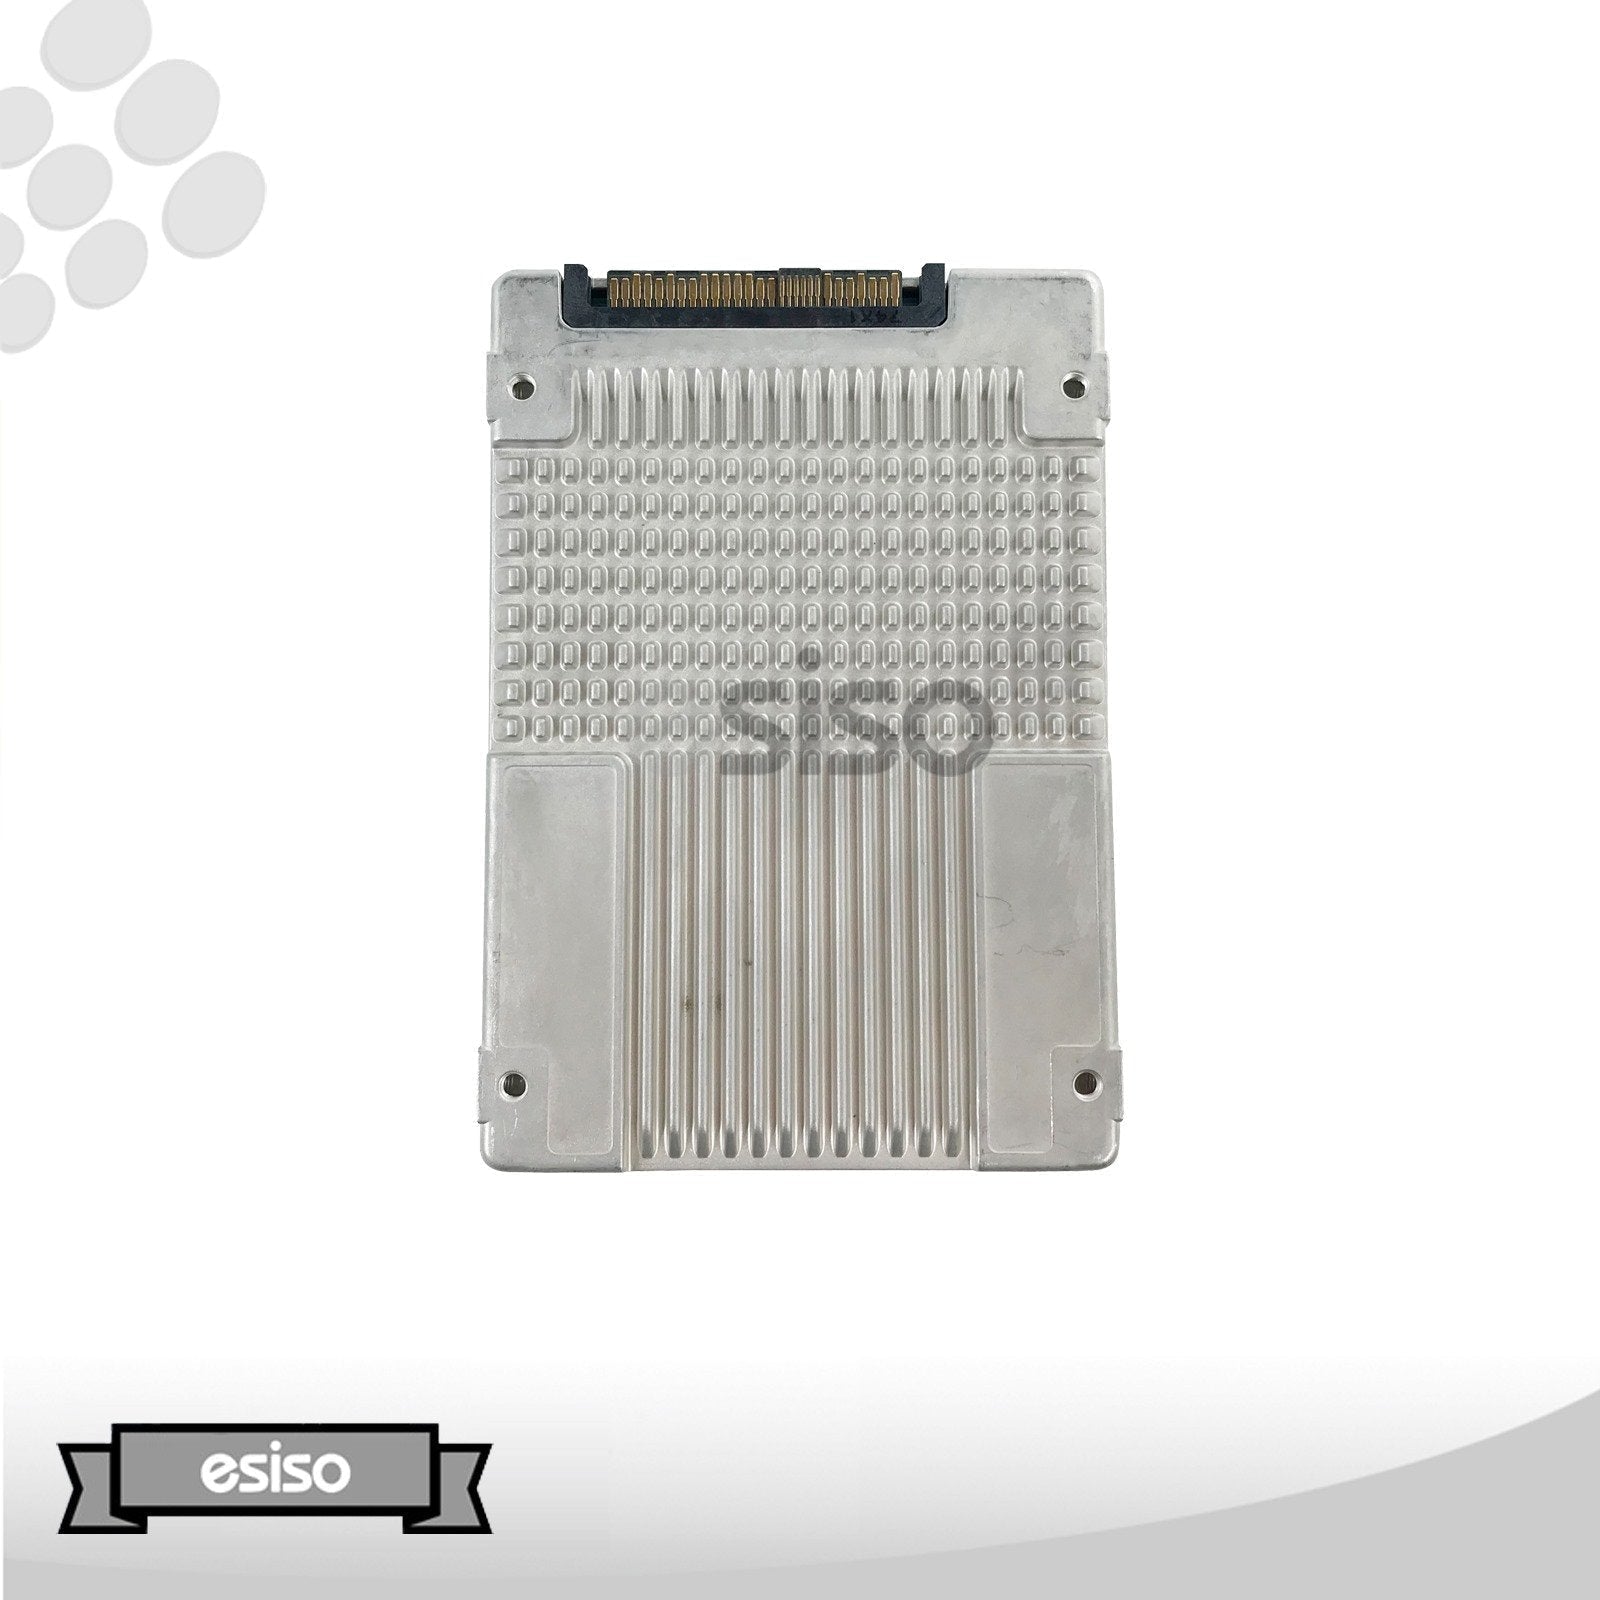 SSDPE2KX040T7 INTEL DC P4500 4TB 6G SFF 2.5" TLC NVME PCIE U.2 SOLID STATE DRIVE